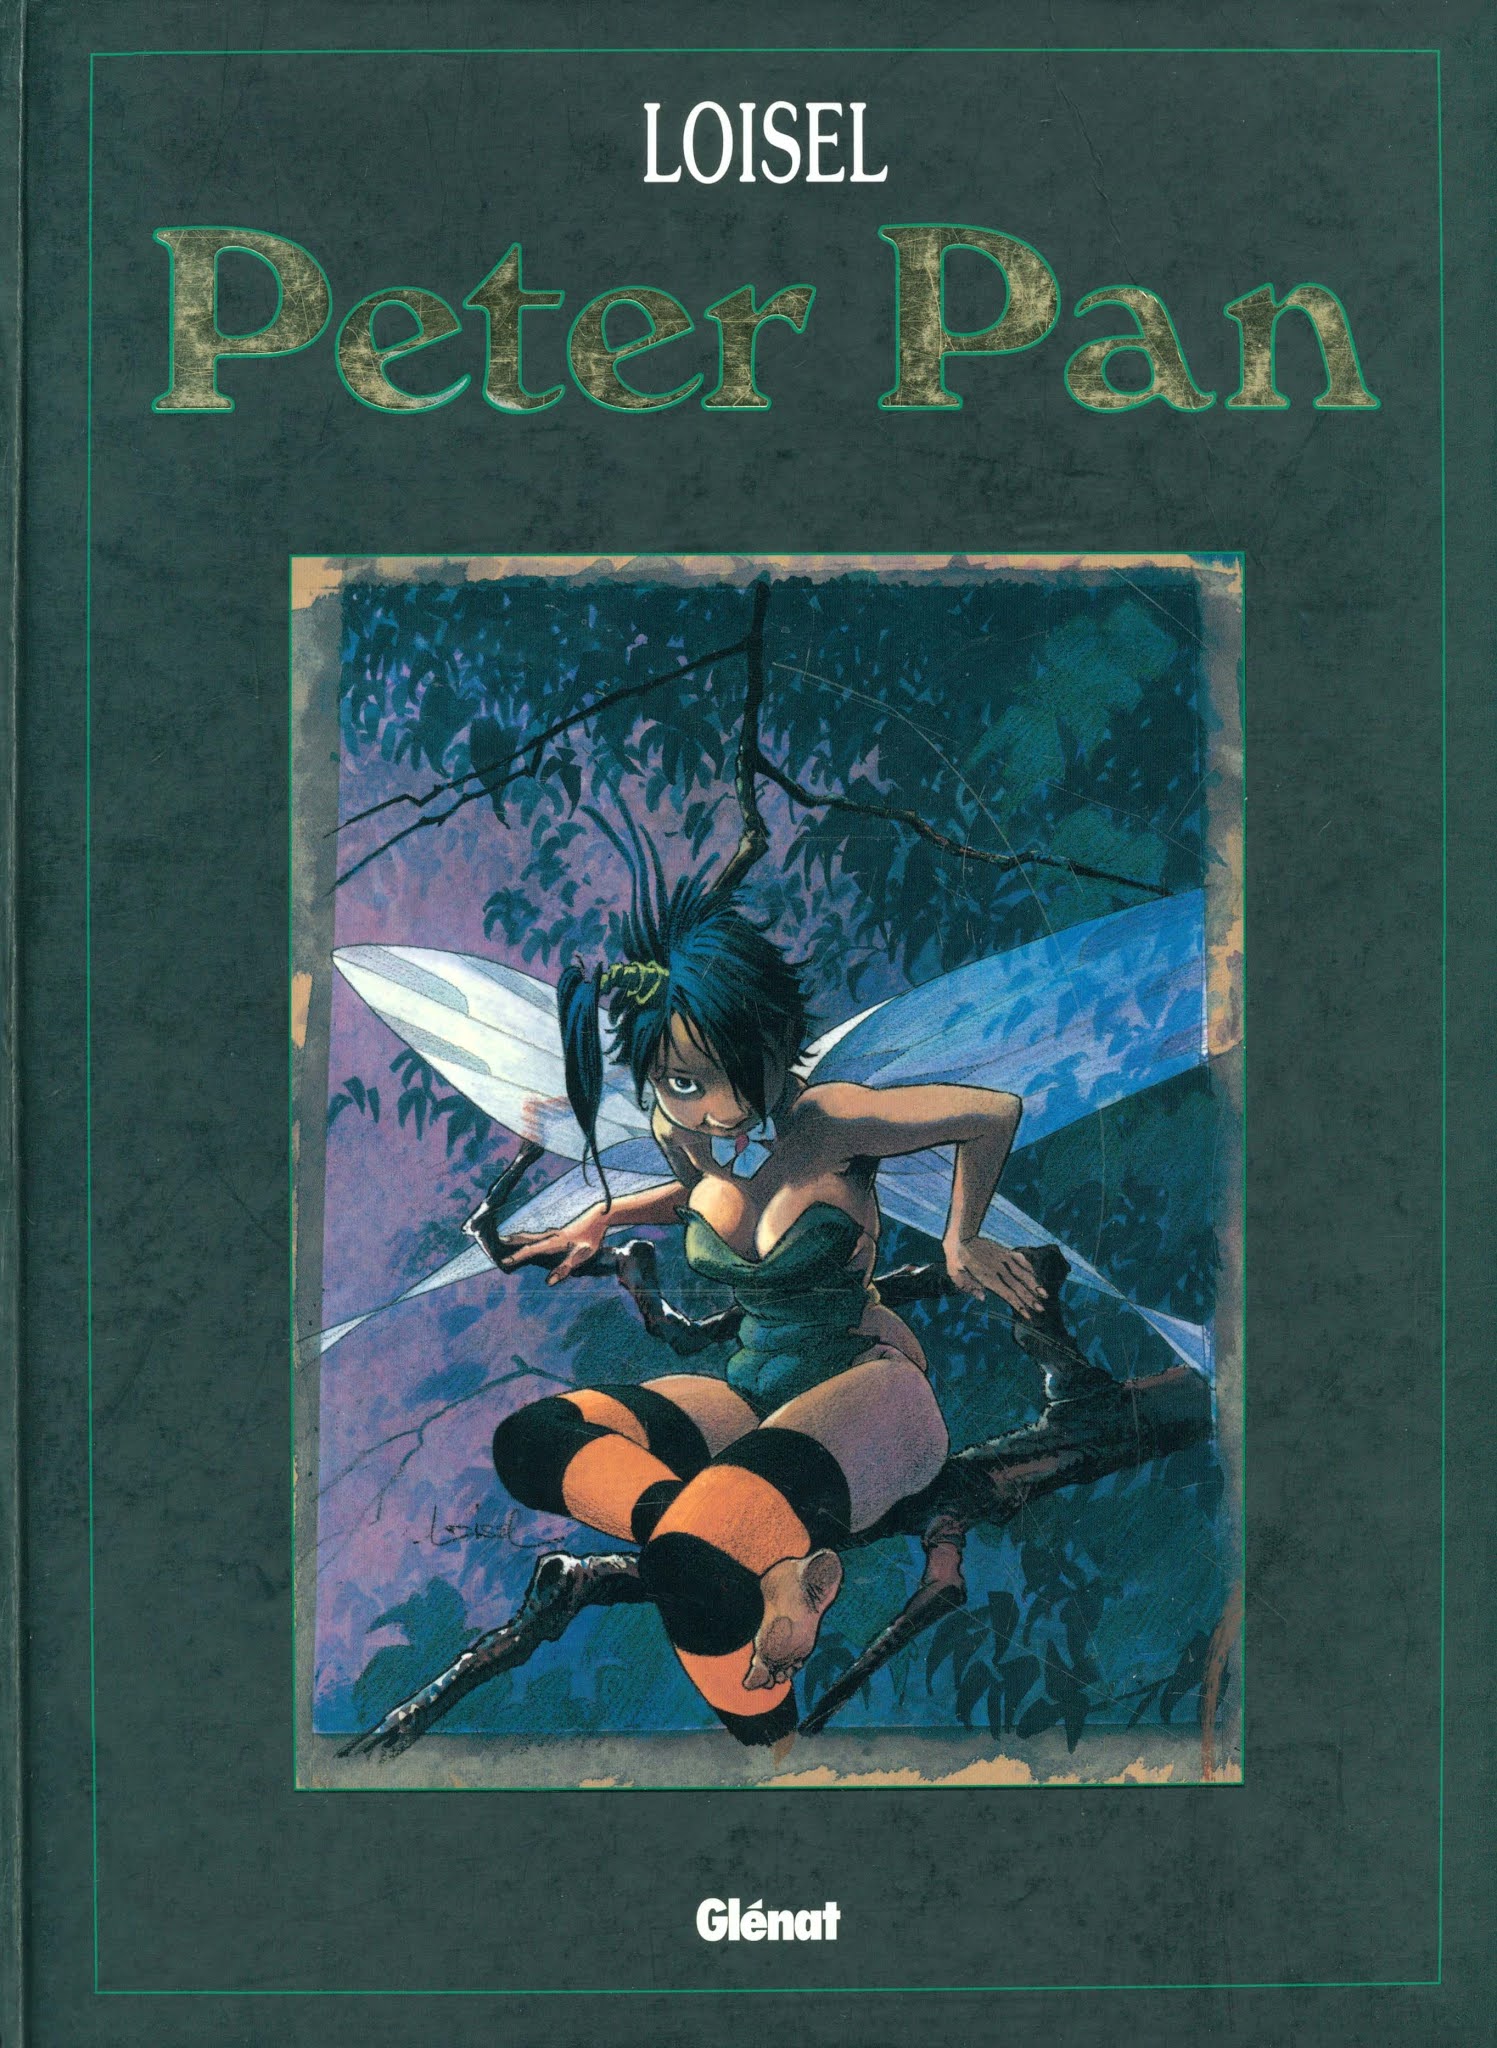 Peter Pan ¿Lo recuerdas?